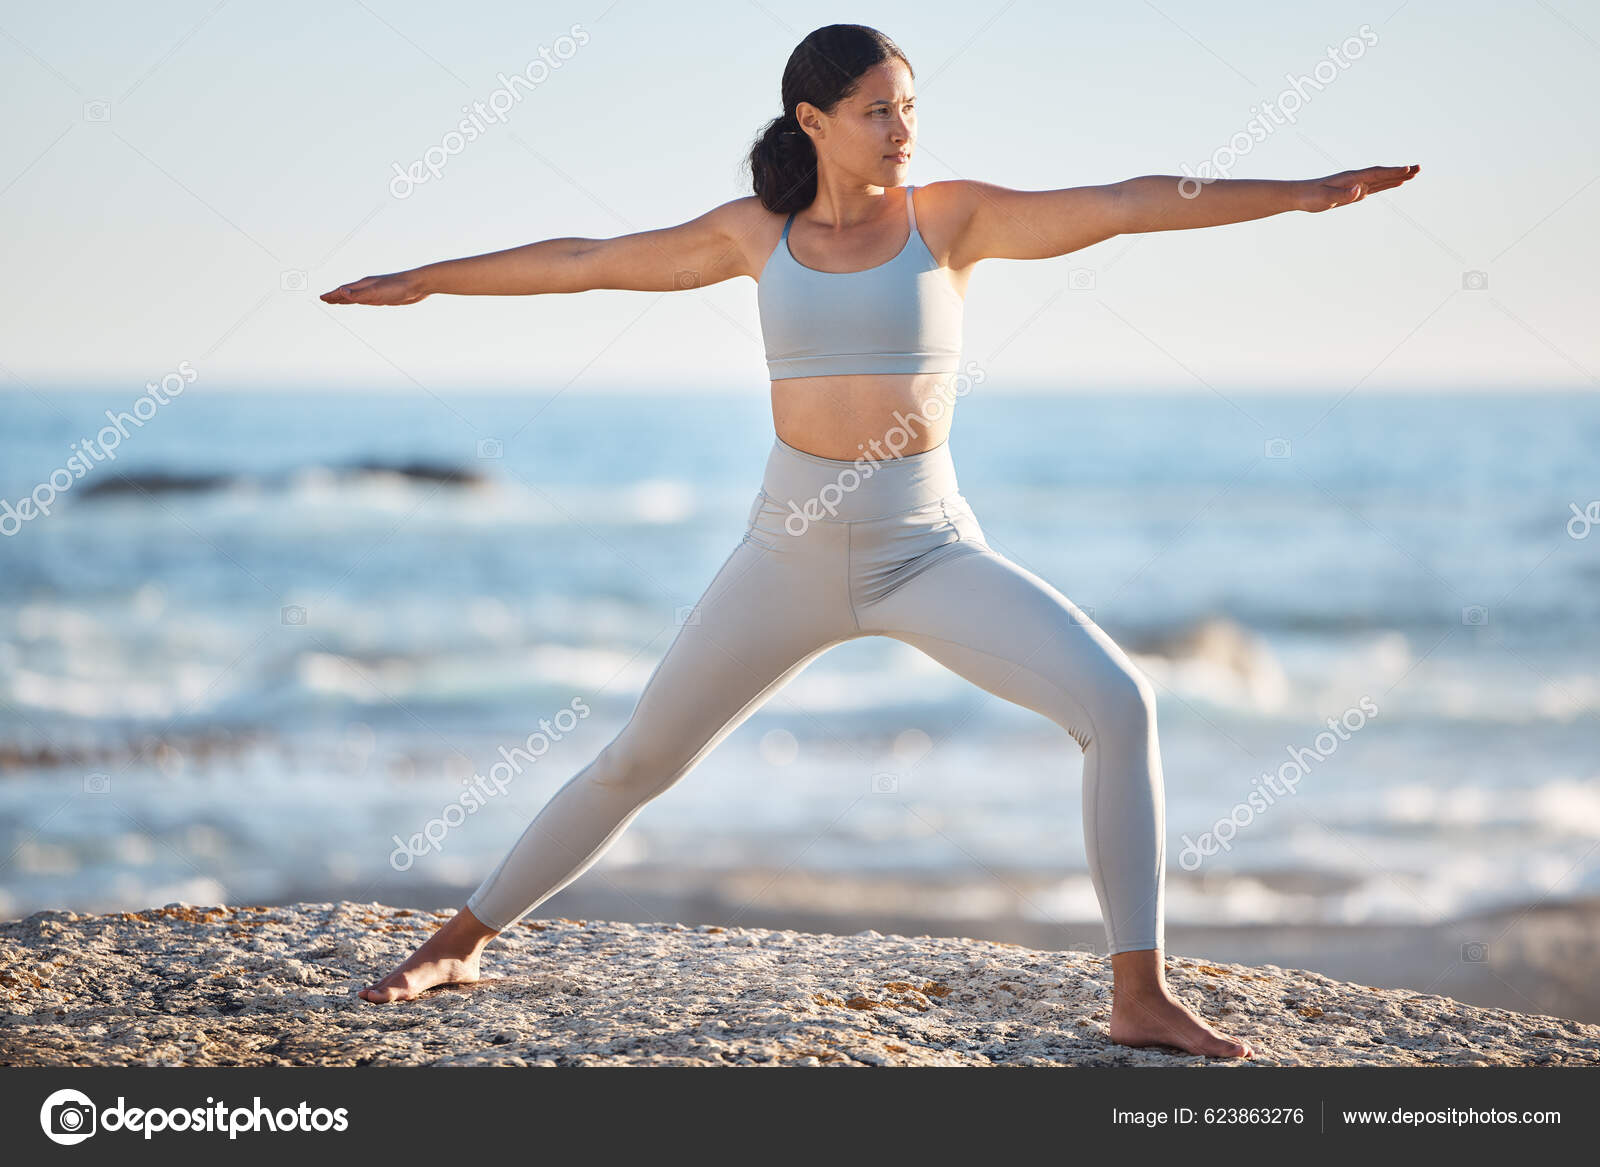 https://st5.depositphotos.com/62628780/62386/i/1600/depositphotos_623863276-stock-photo-yoga-stretching-beach-woman-body.jpg